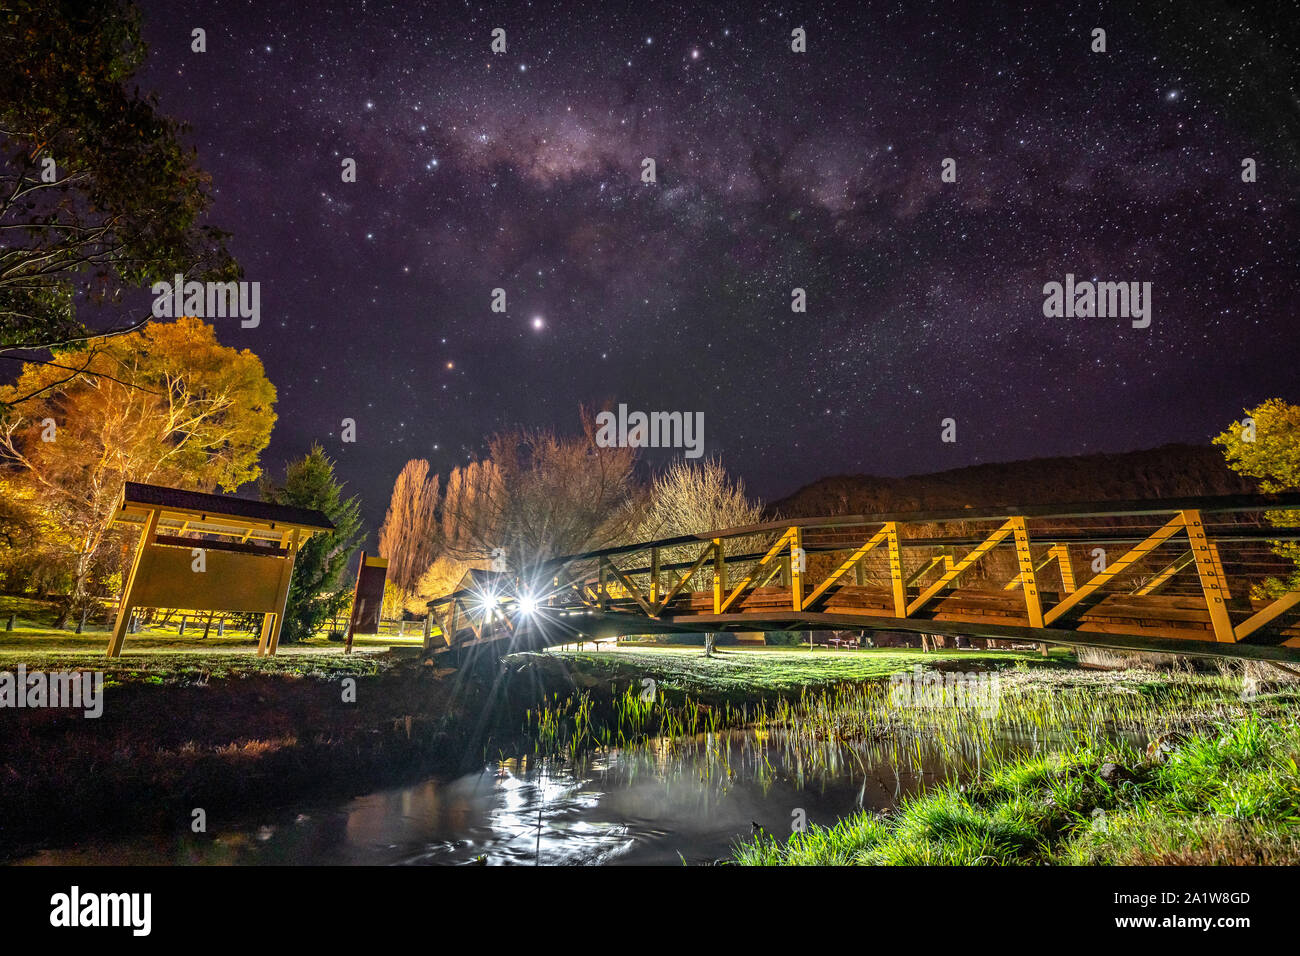 Milky way galaxy night sky in rural Australia Stock Photo